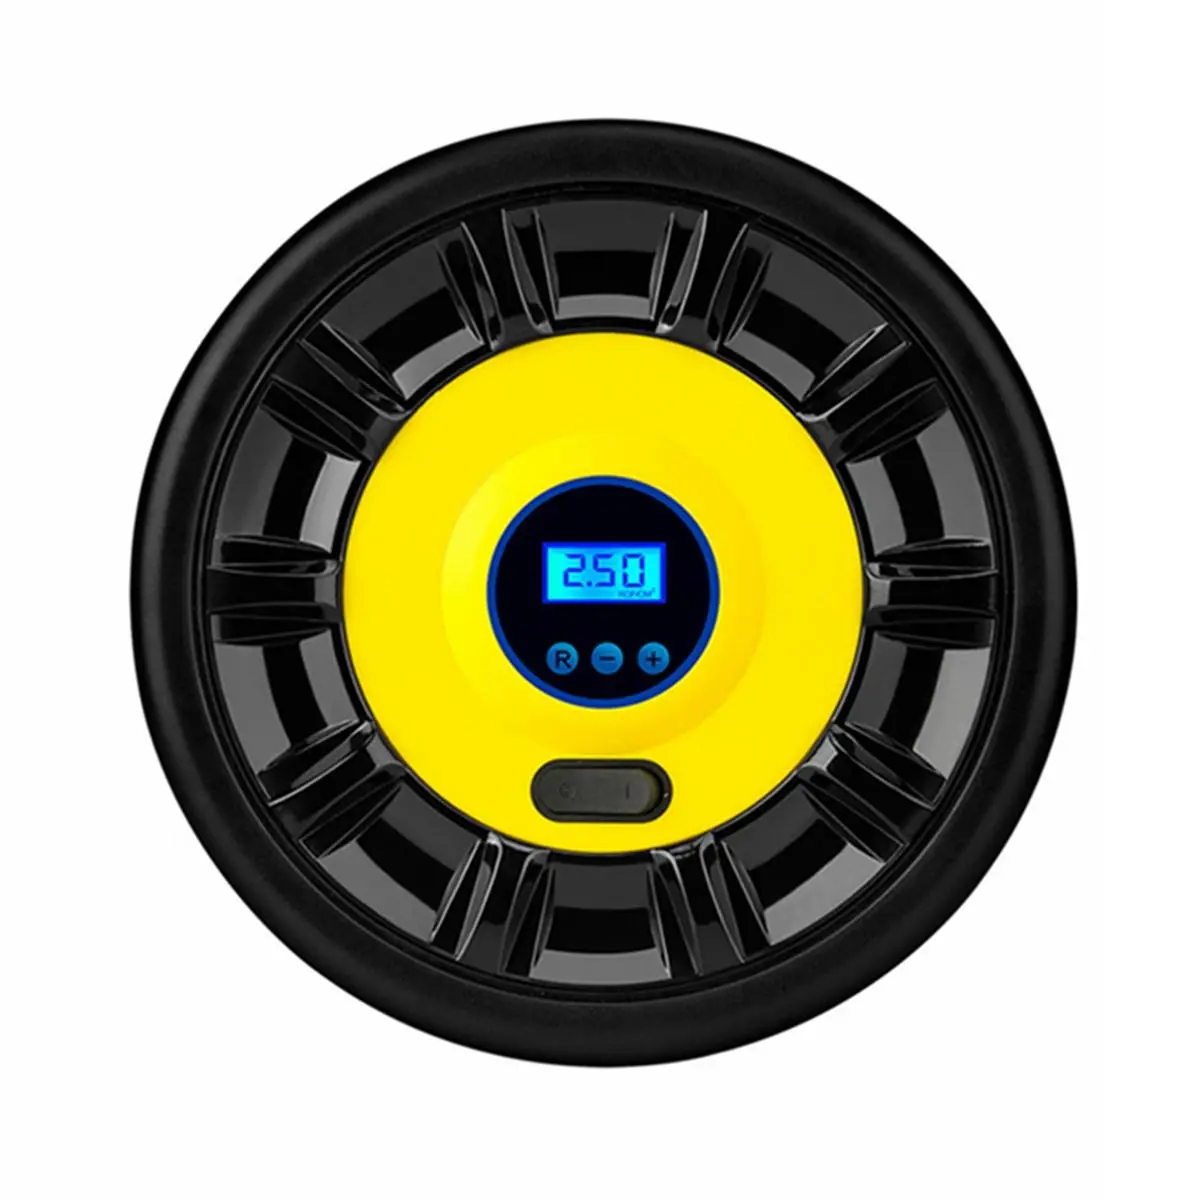 12v portable tire air pump digital display/pointer compressor inflator w/ led lights